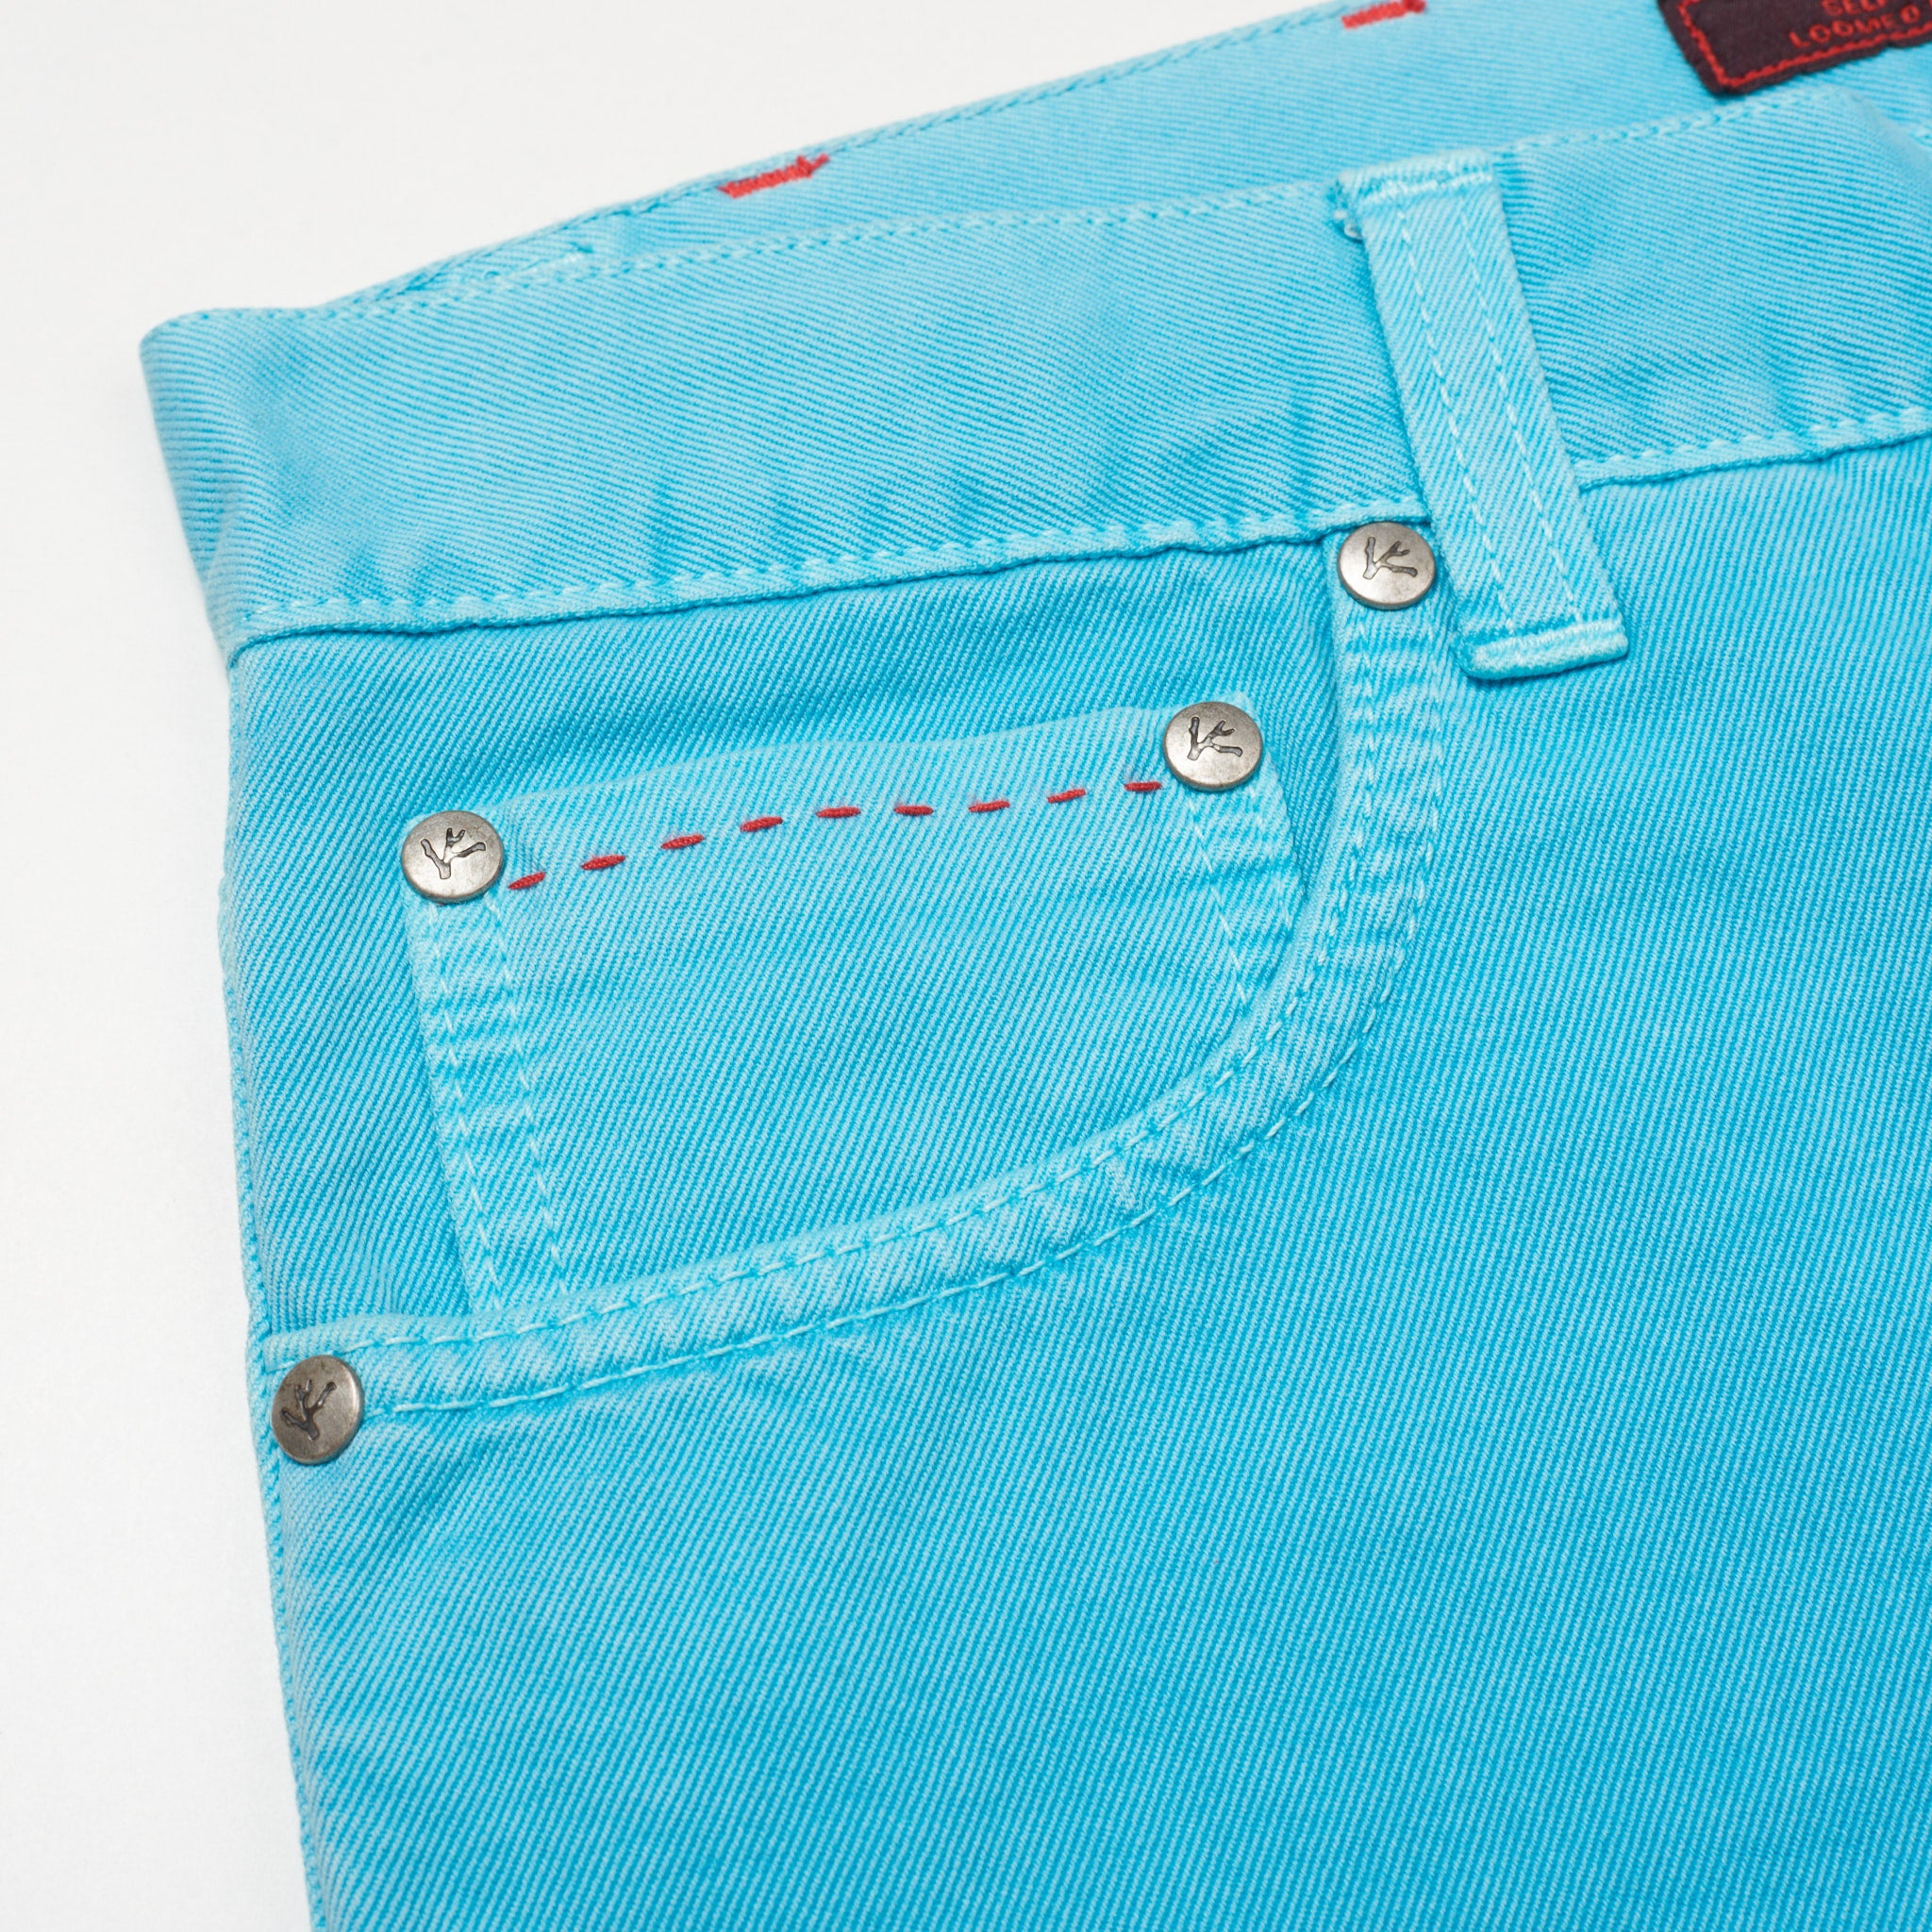 ISAIA Napoli Light Blue Denim Selvedge Jeans Pants NEW US 30 Slim Fit ISAIA